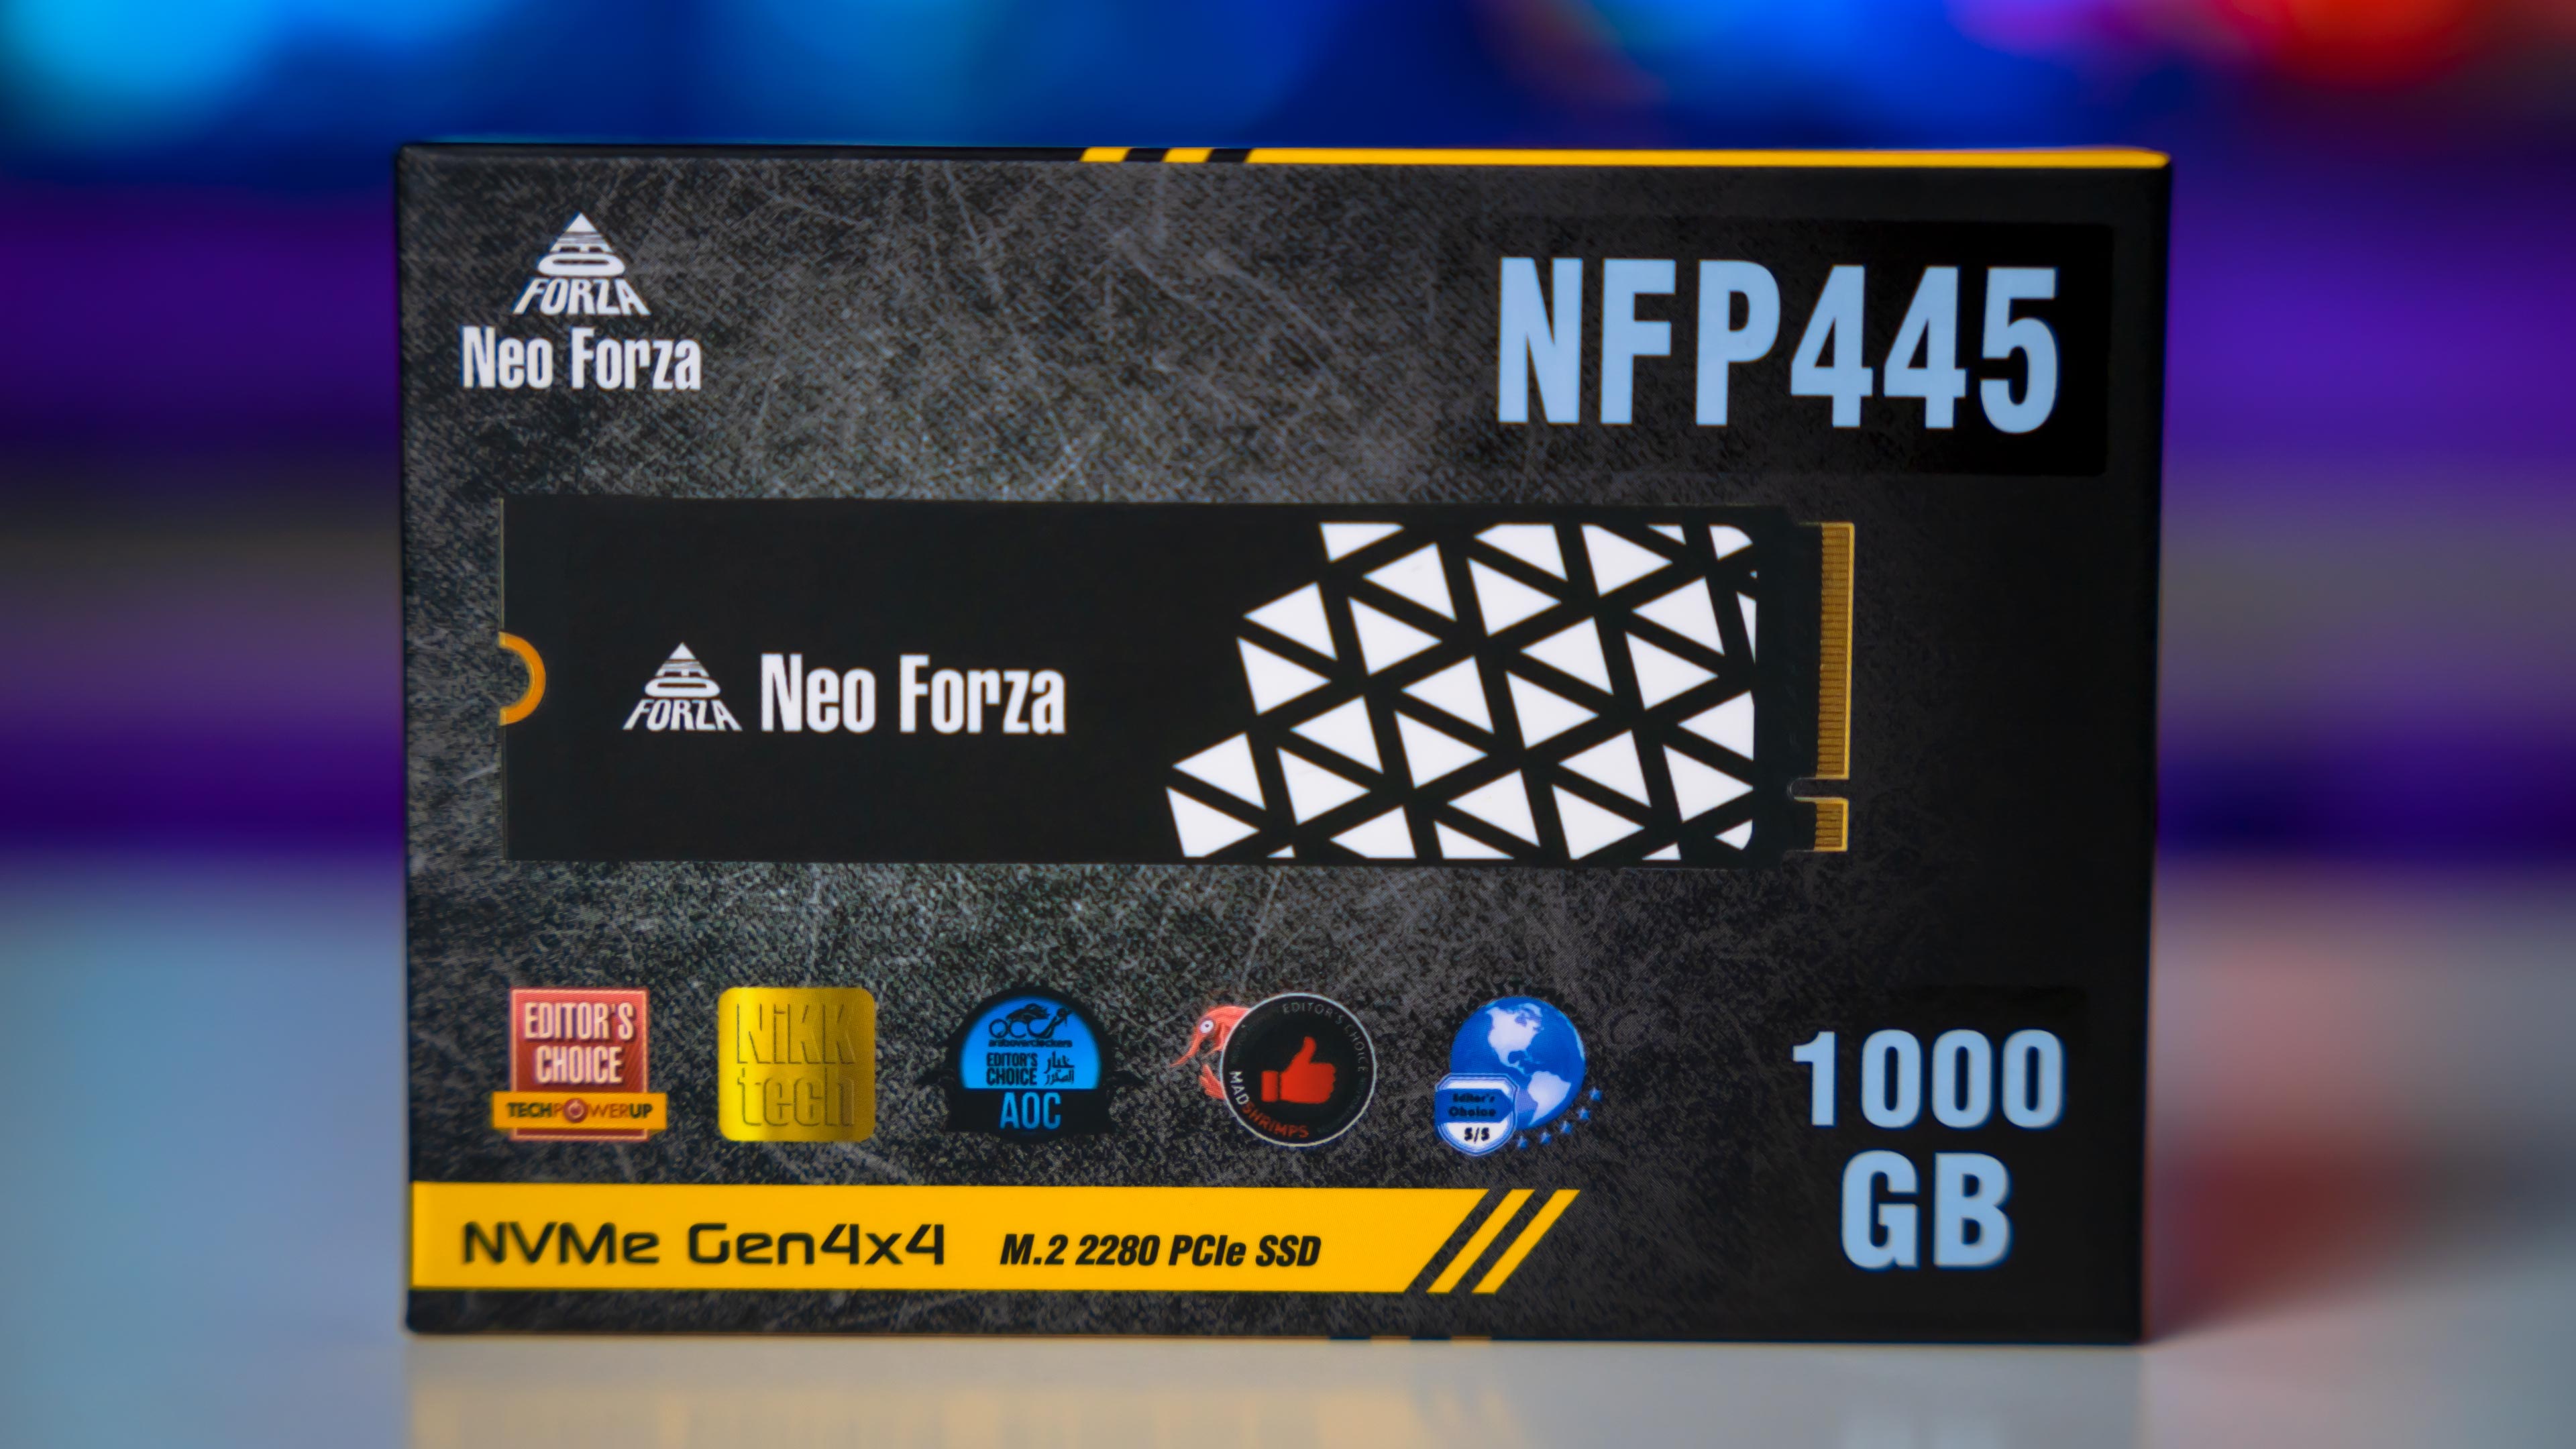 Neo Forza NFP445 1TB Gen4 Box (1)